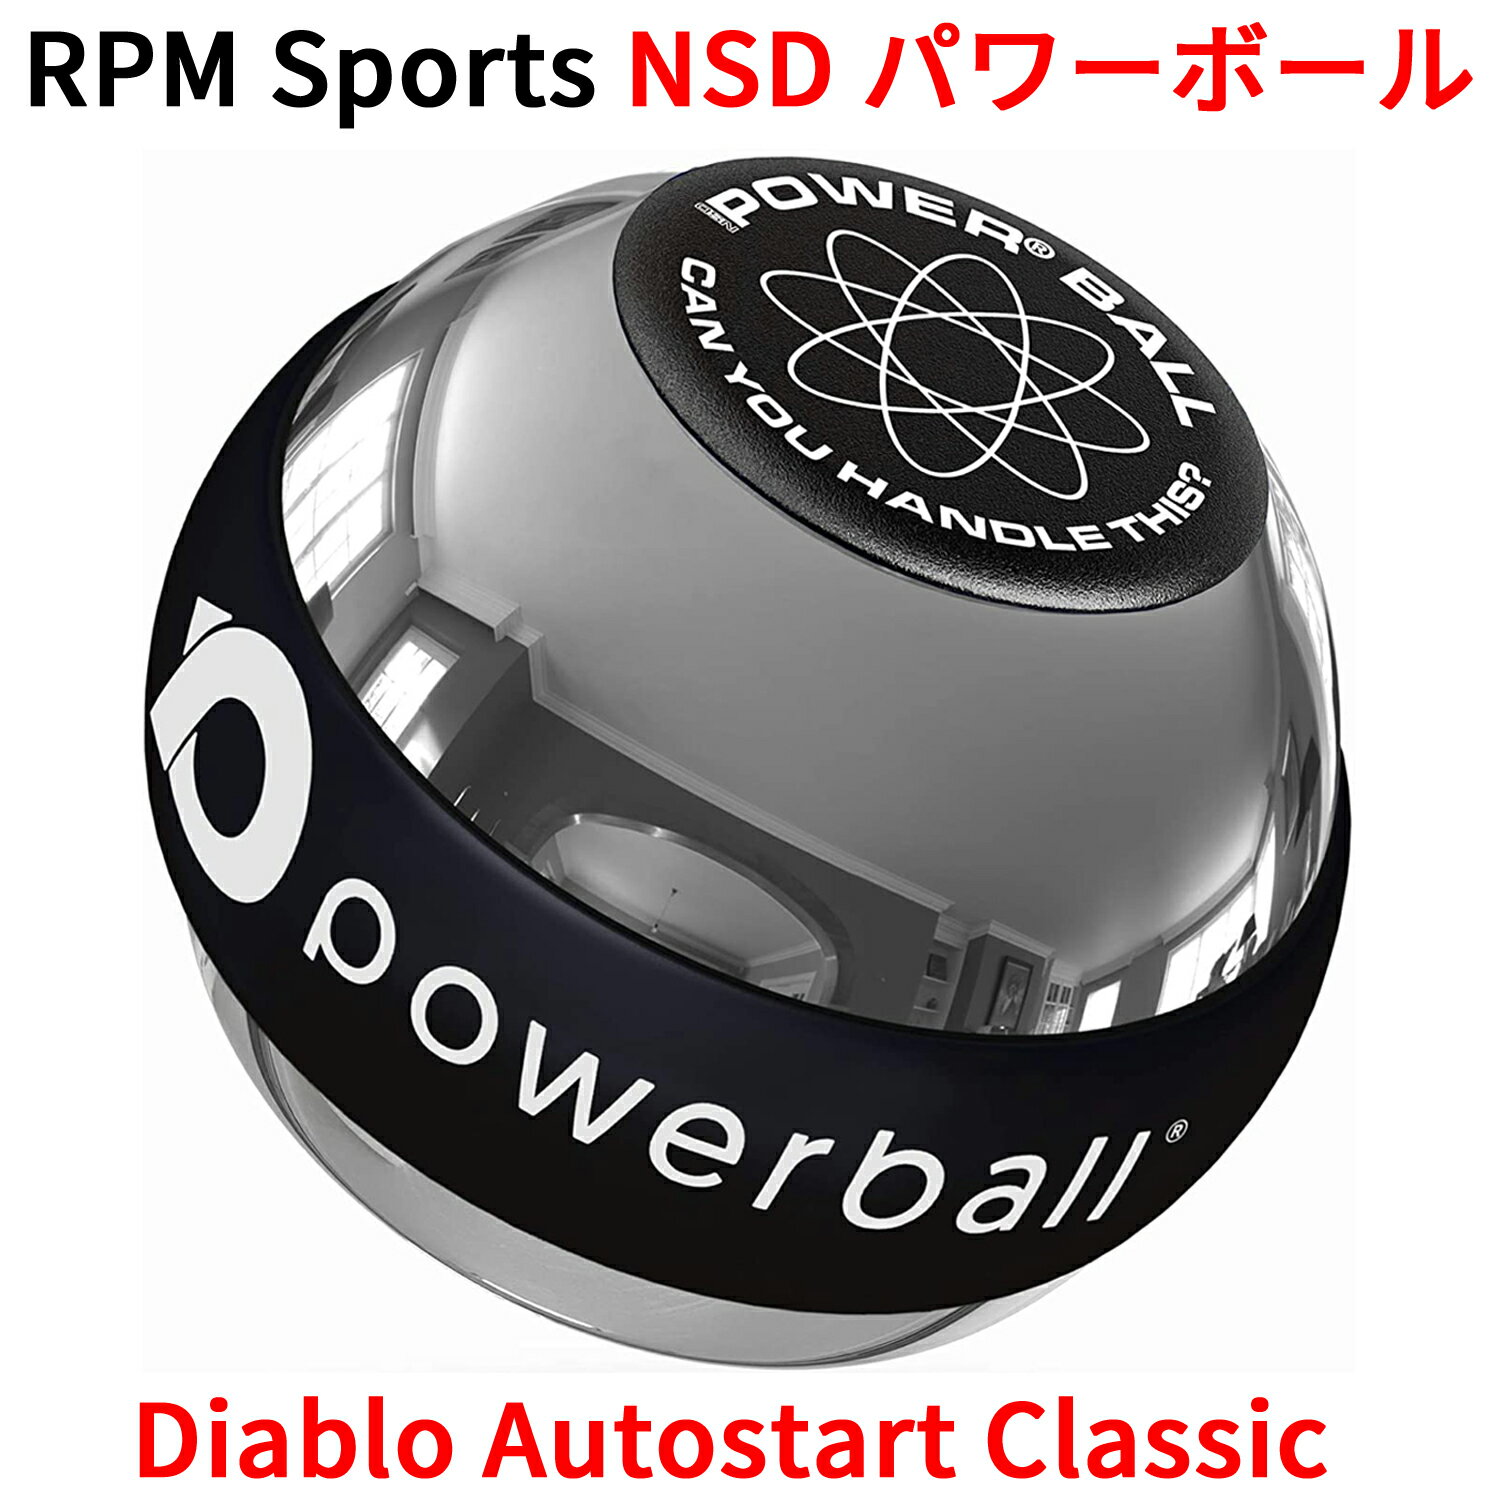 RPM Sports NSD パワーボール Diablo Evo Autostart Classic ディアブロ エボ オートスタート クラシック オートスタート機能 メタルモデル 筋トレ 握力 前腕 手首 トレーニング 上級 上級者 器具 最強 静か 静音 トレーニングボール ローラー リストボール 高負荷